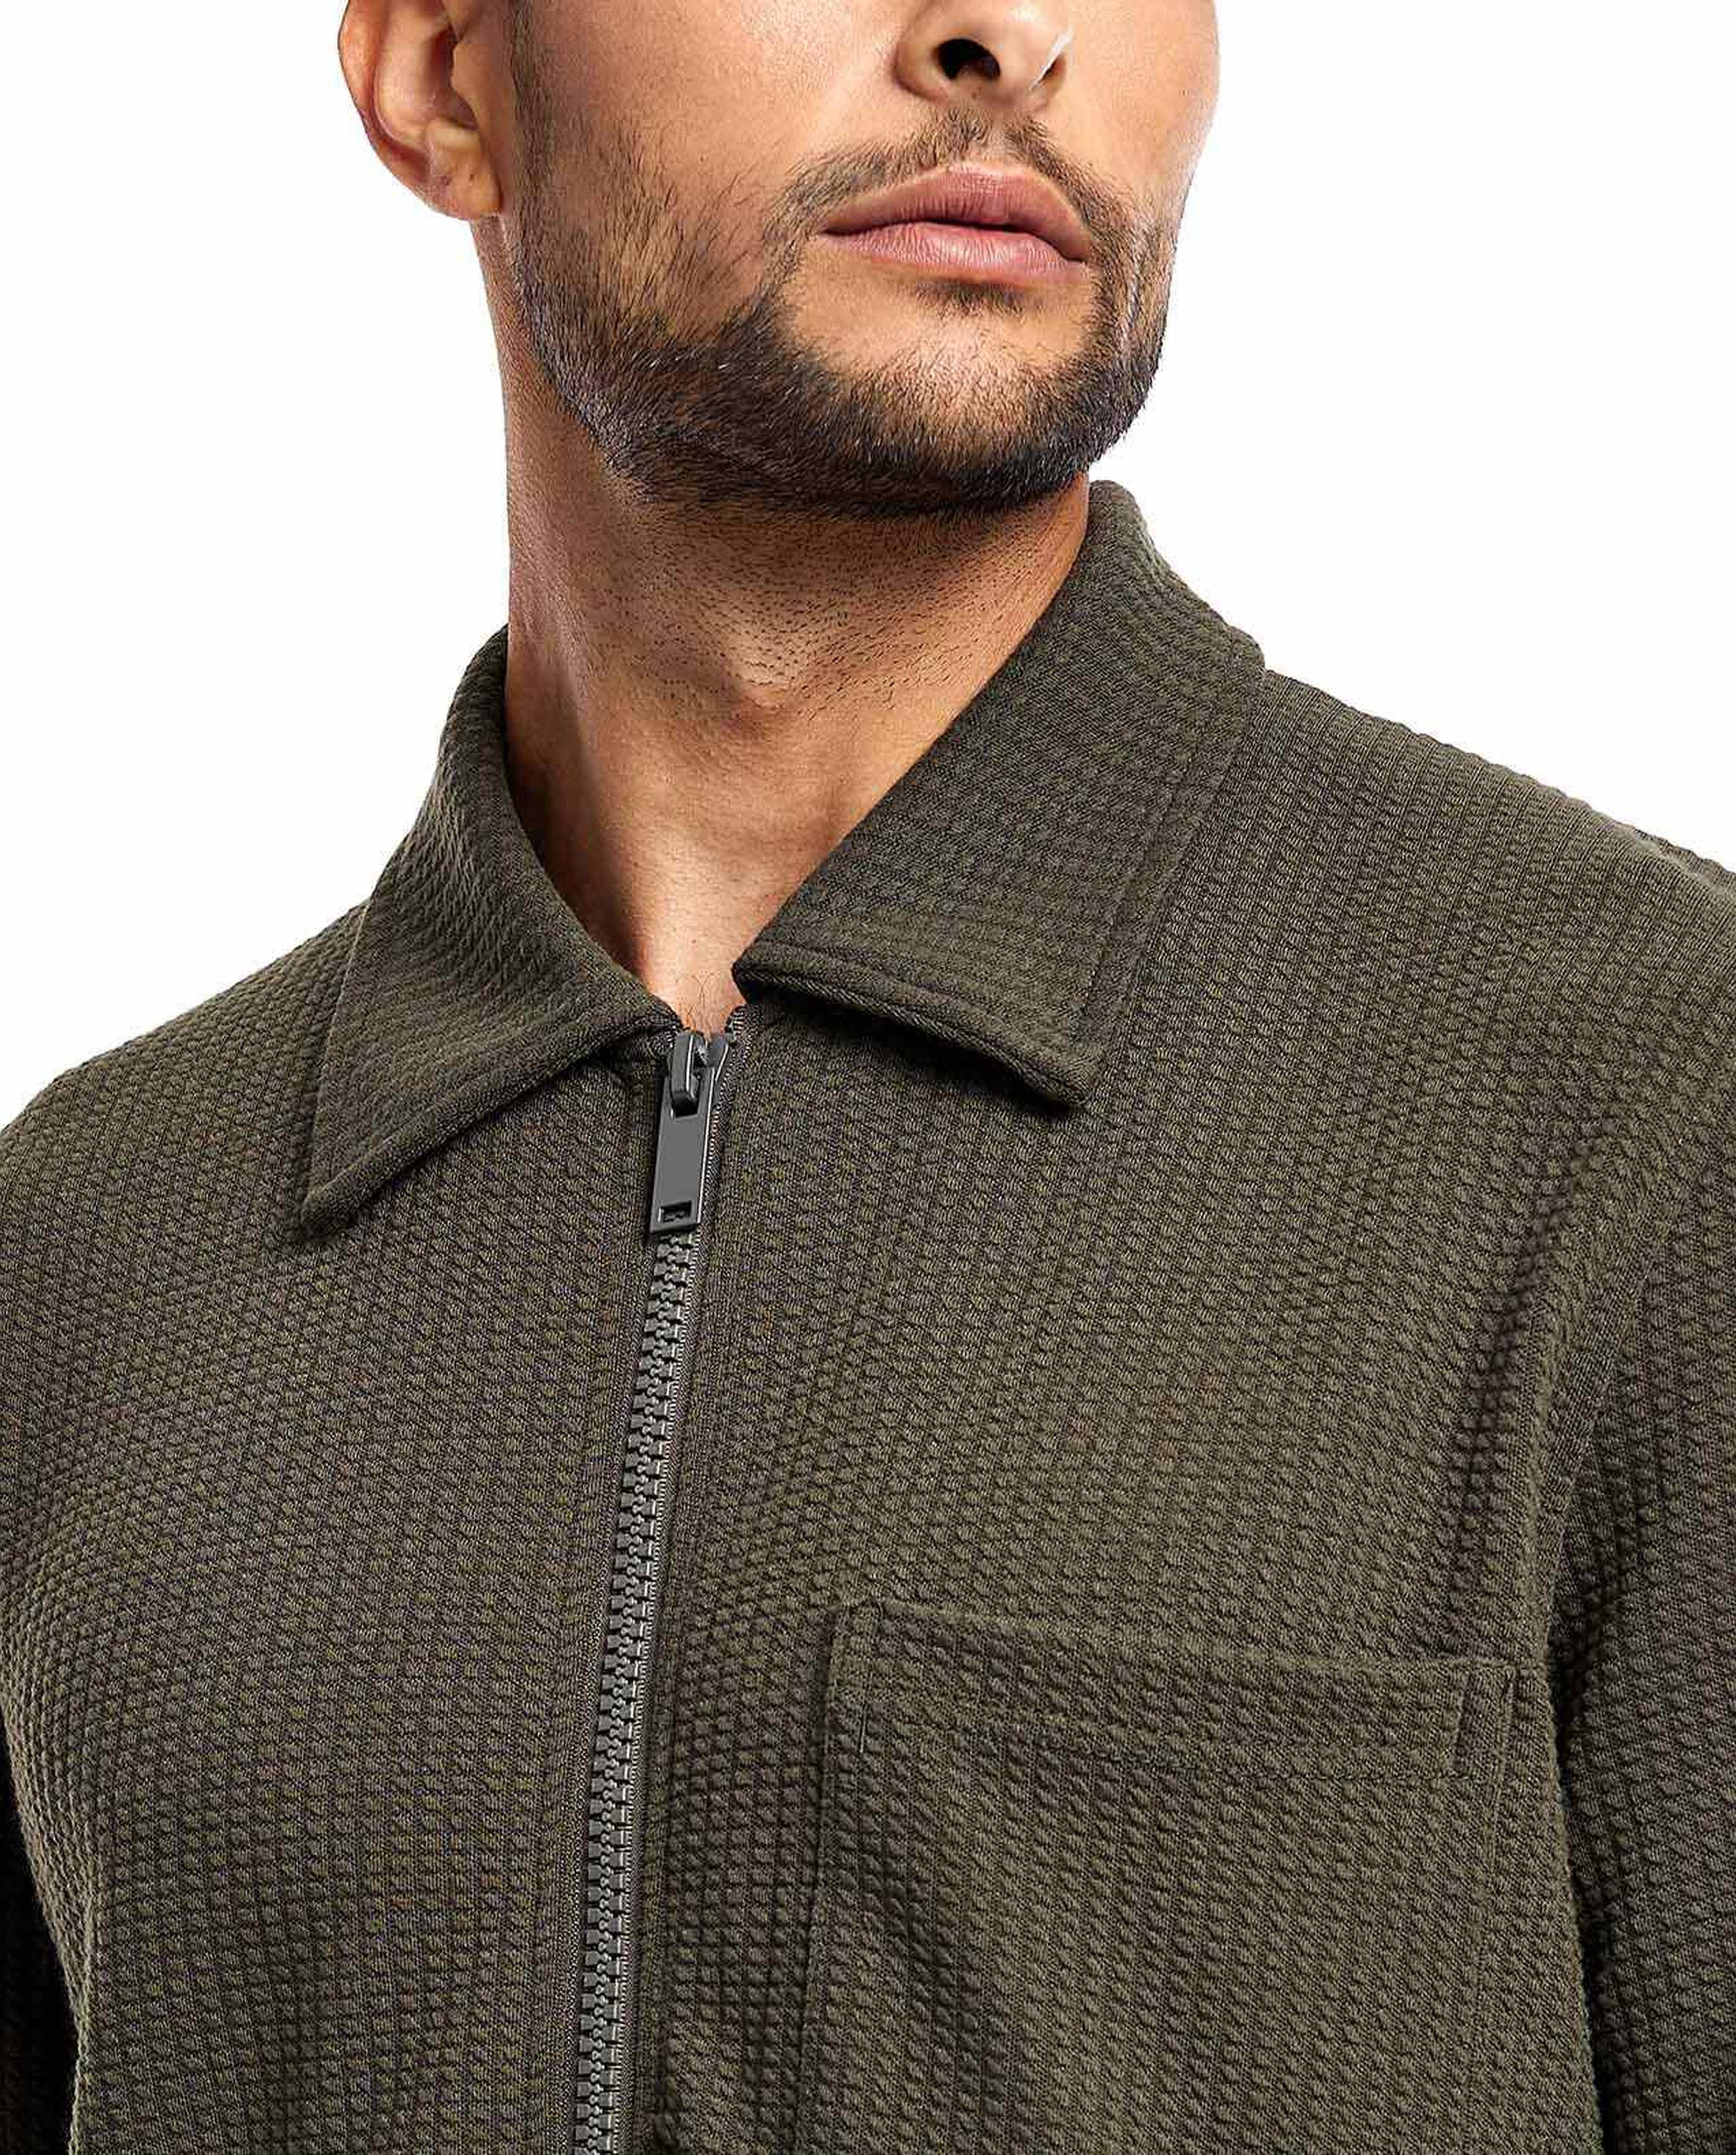 Textured Jacket with Zipper Closure